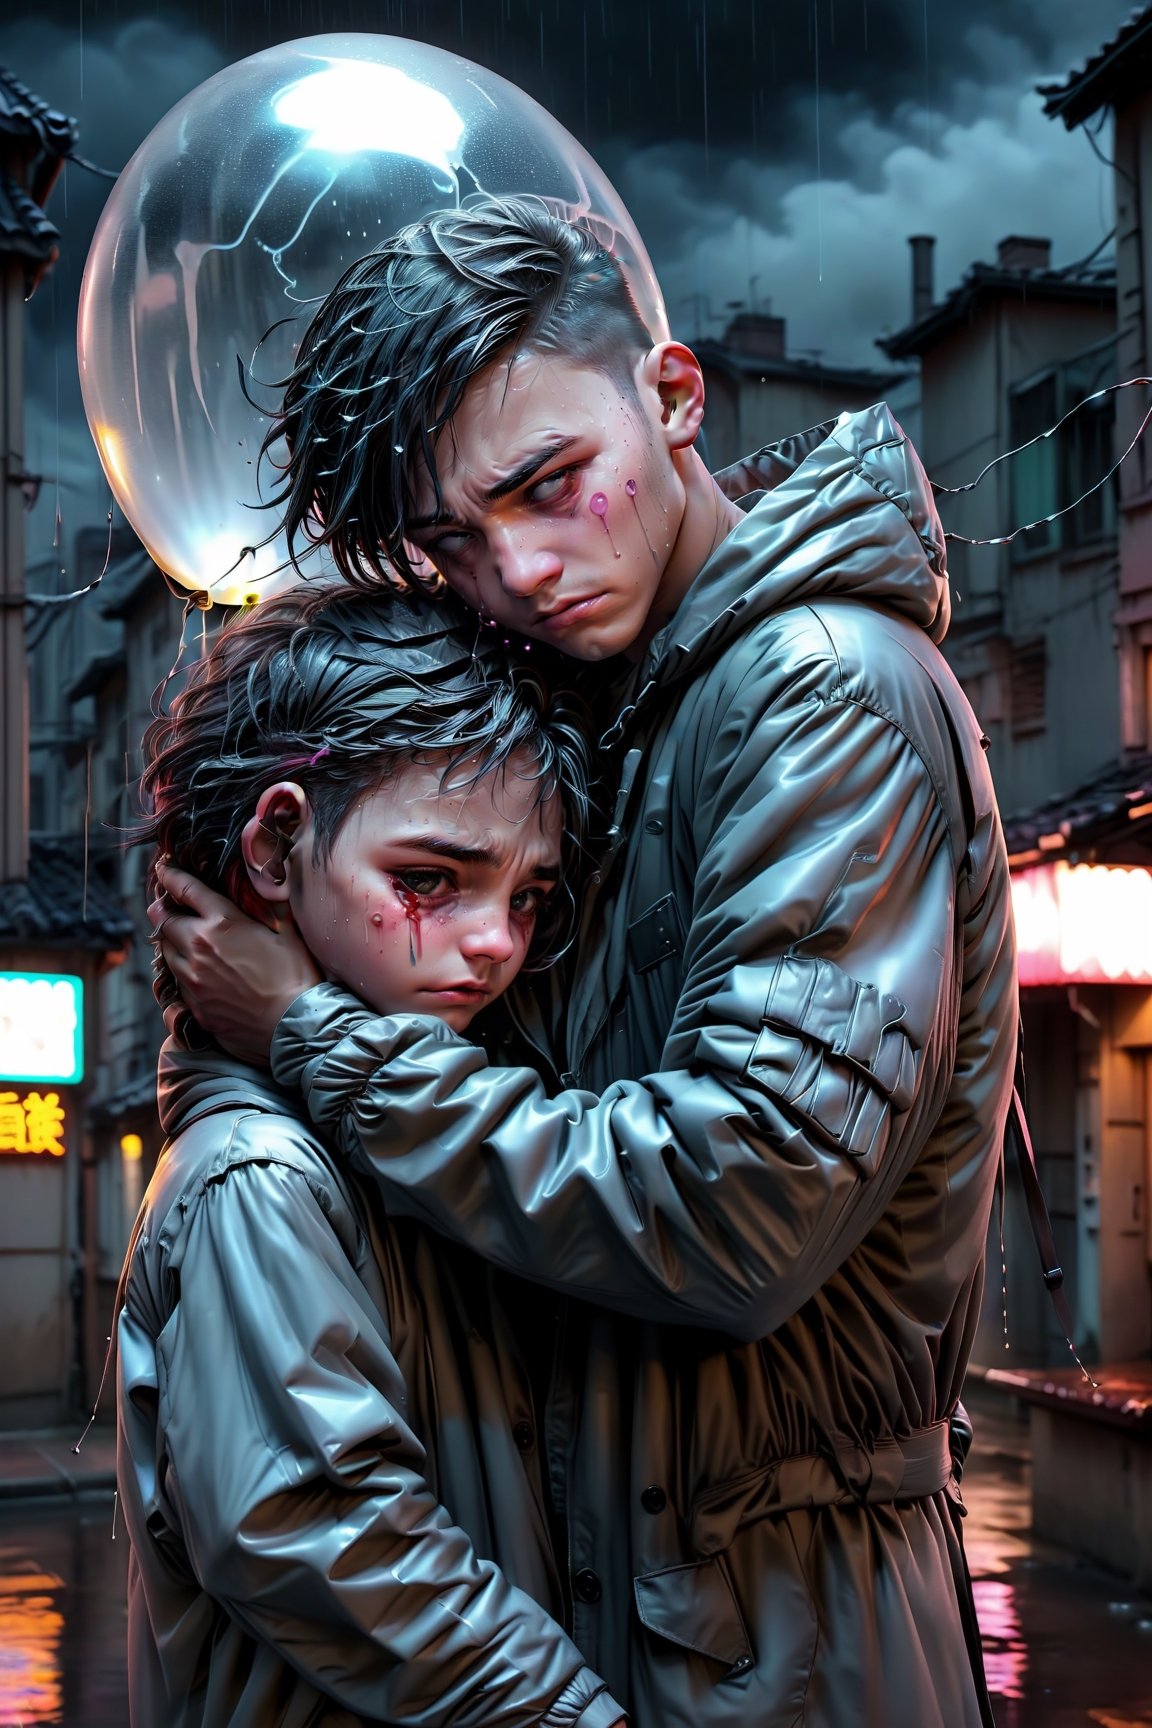 sad boy, hugging a balloon and cry, rain, cyberpunk city, cinmematic, emotional, dark night, raincoat, glowing